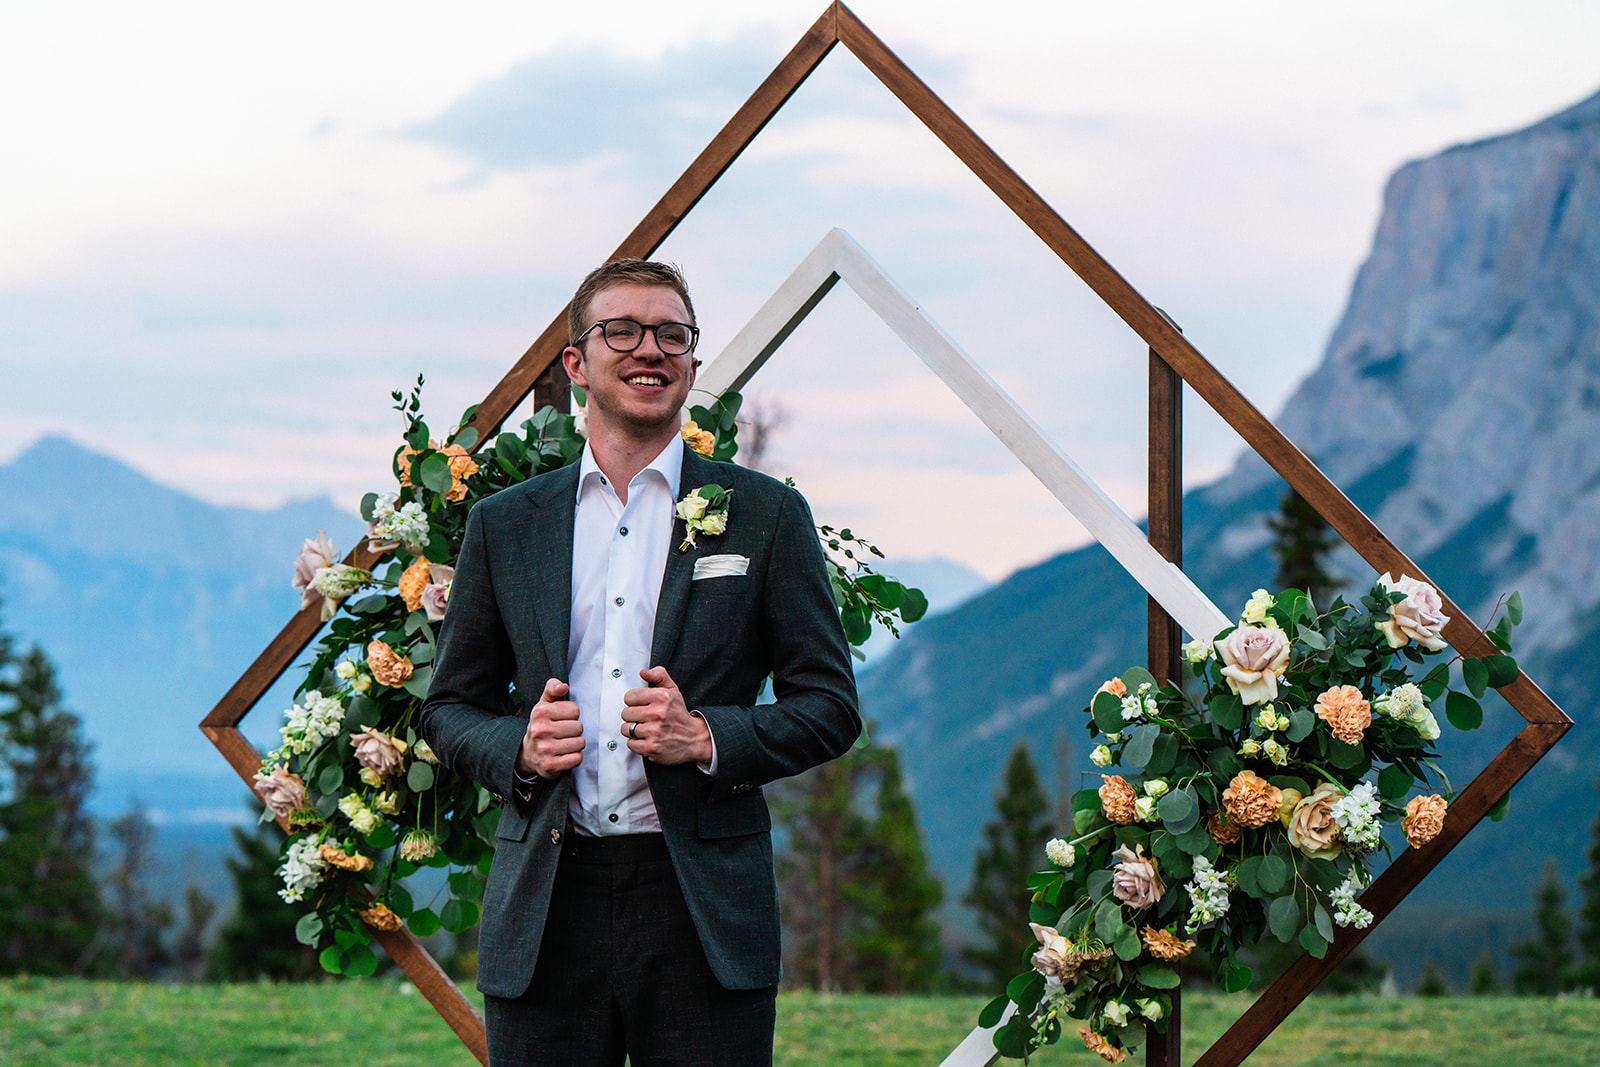 Groom posing in wedding suite in front of wooden arch